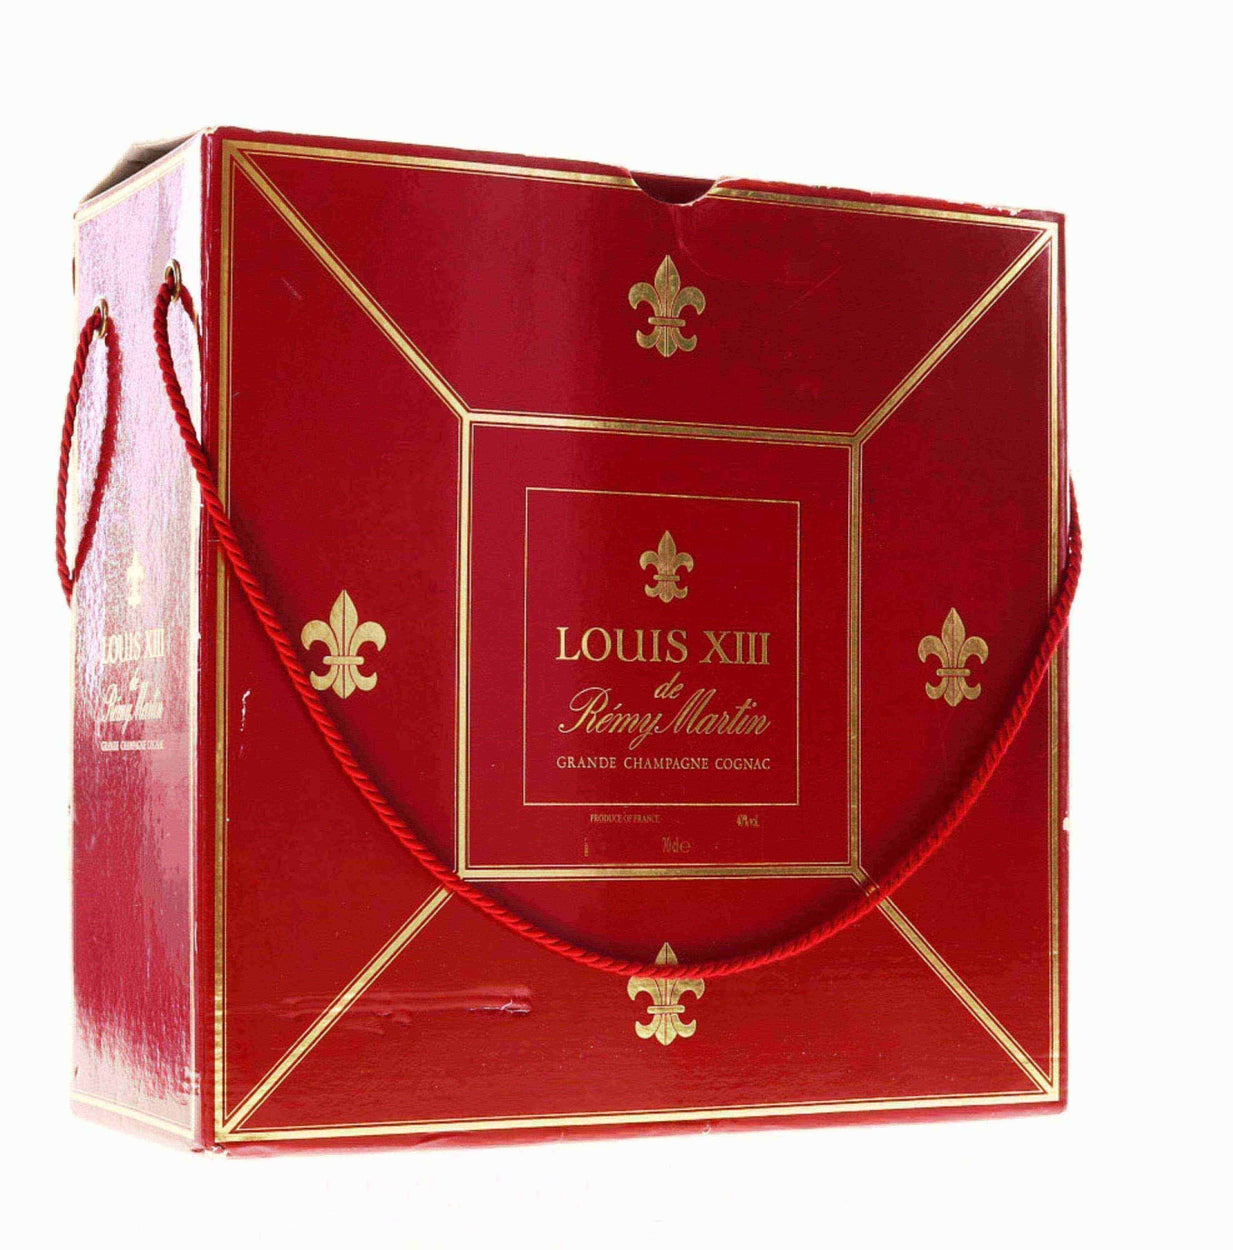 Louis XIII Cognac 1990s Original Box Set